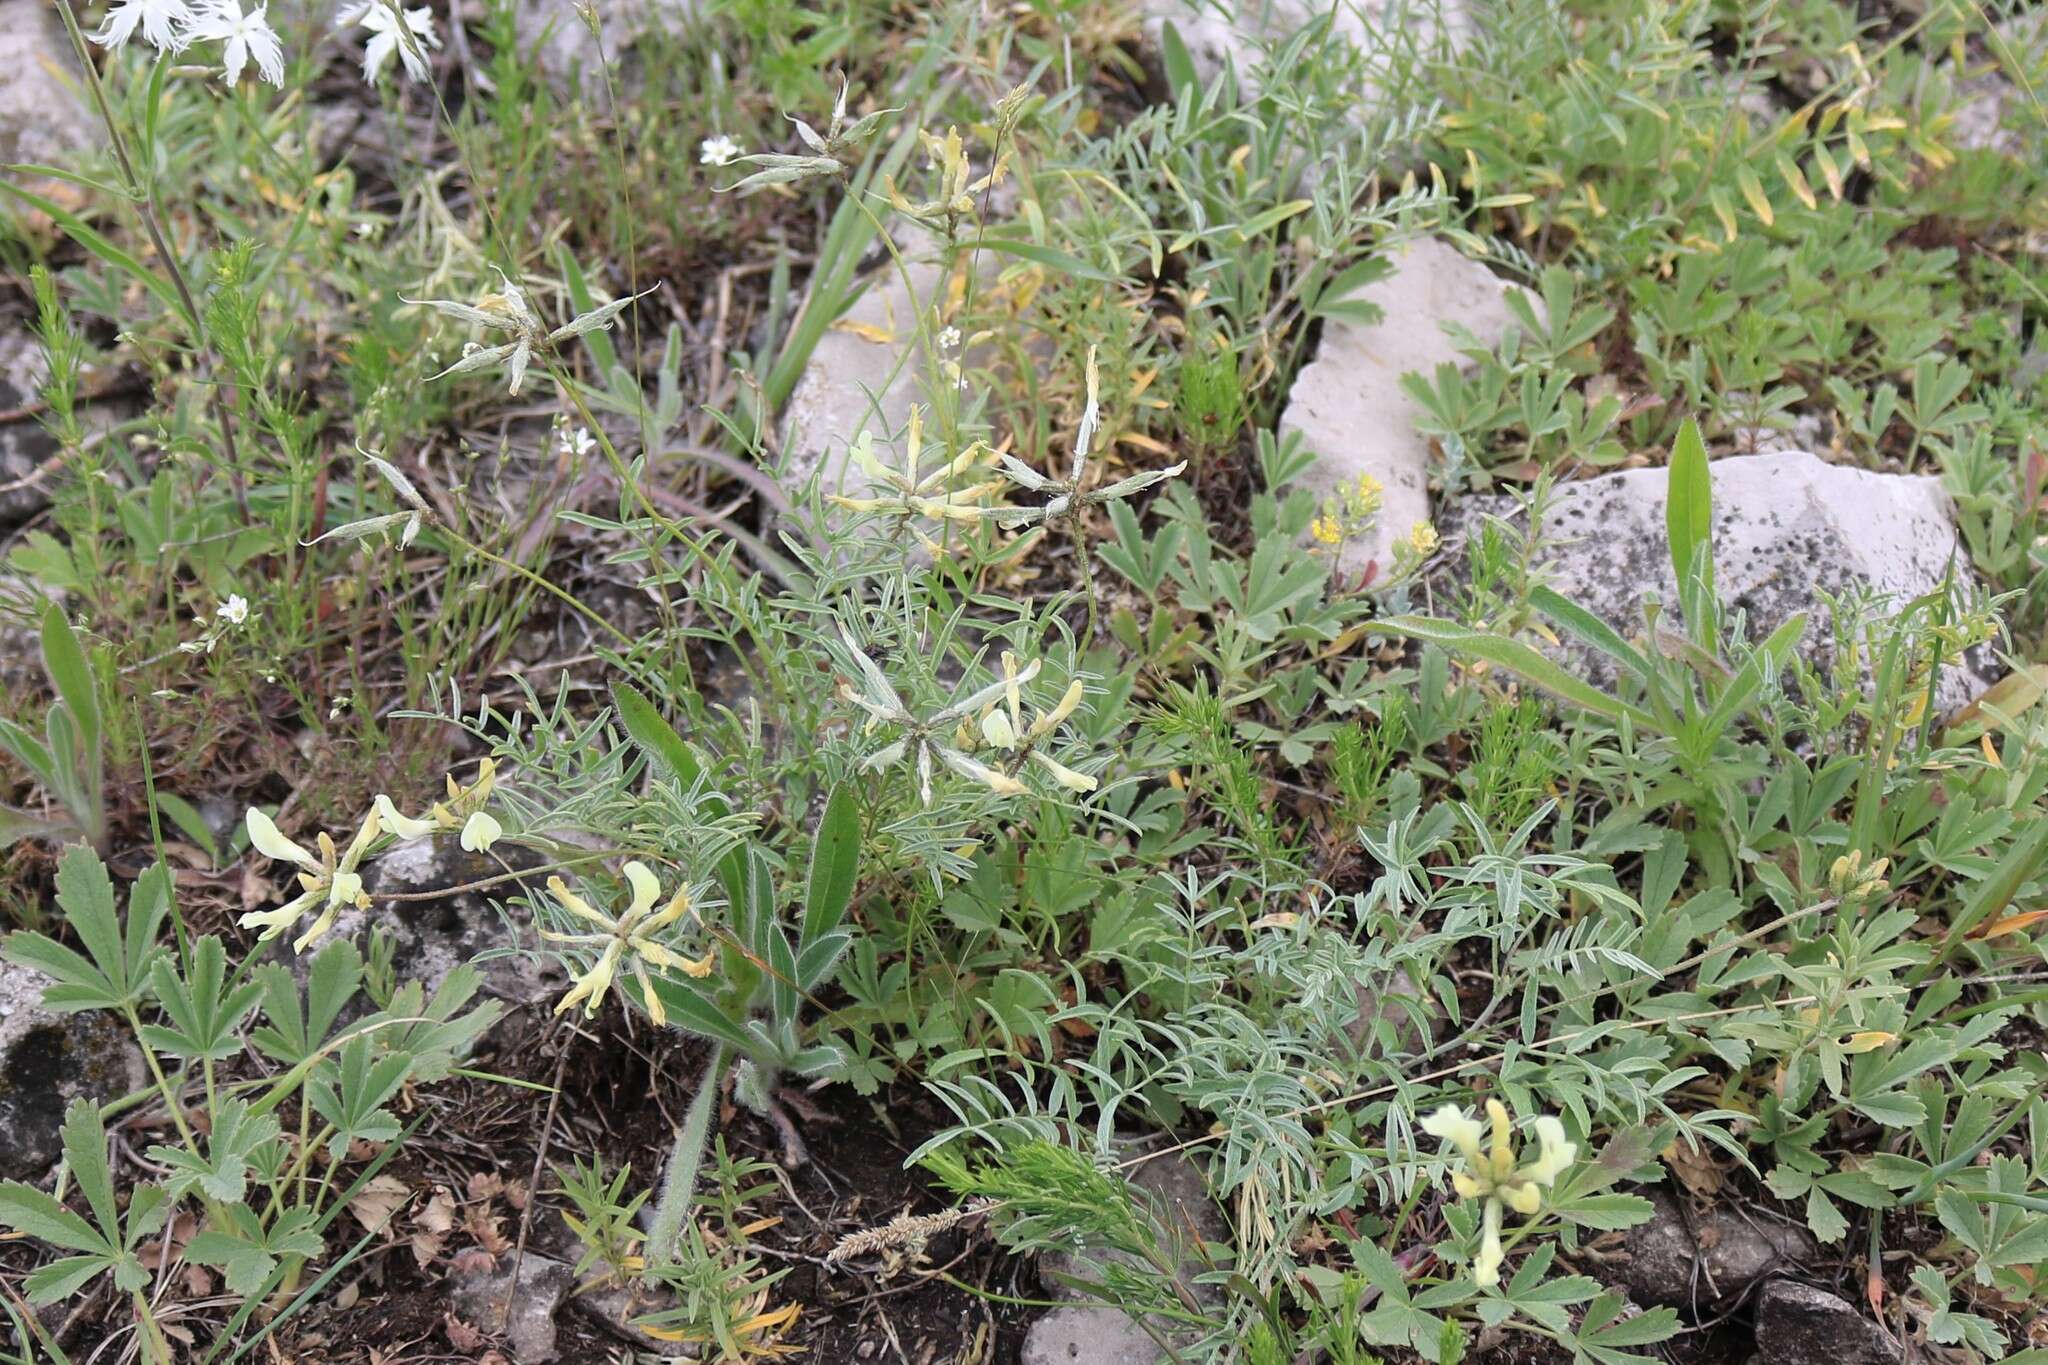 Image of Astragalus karelinianus Popov